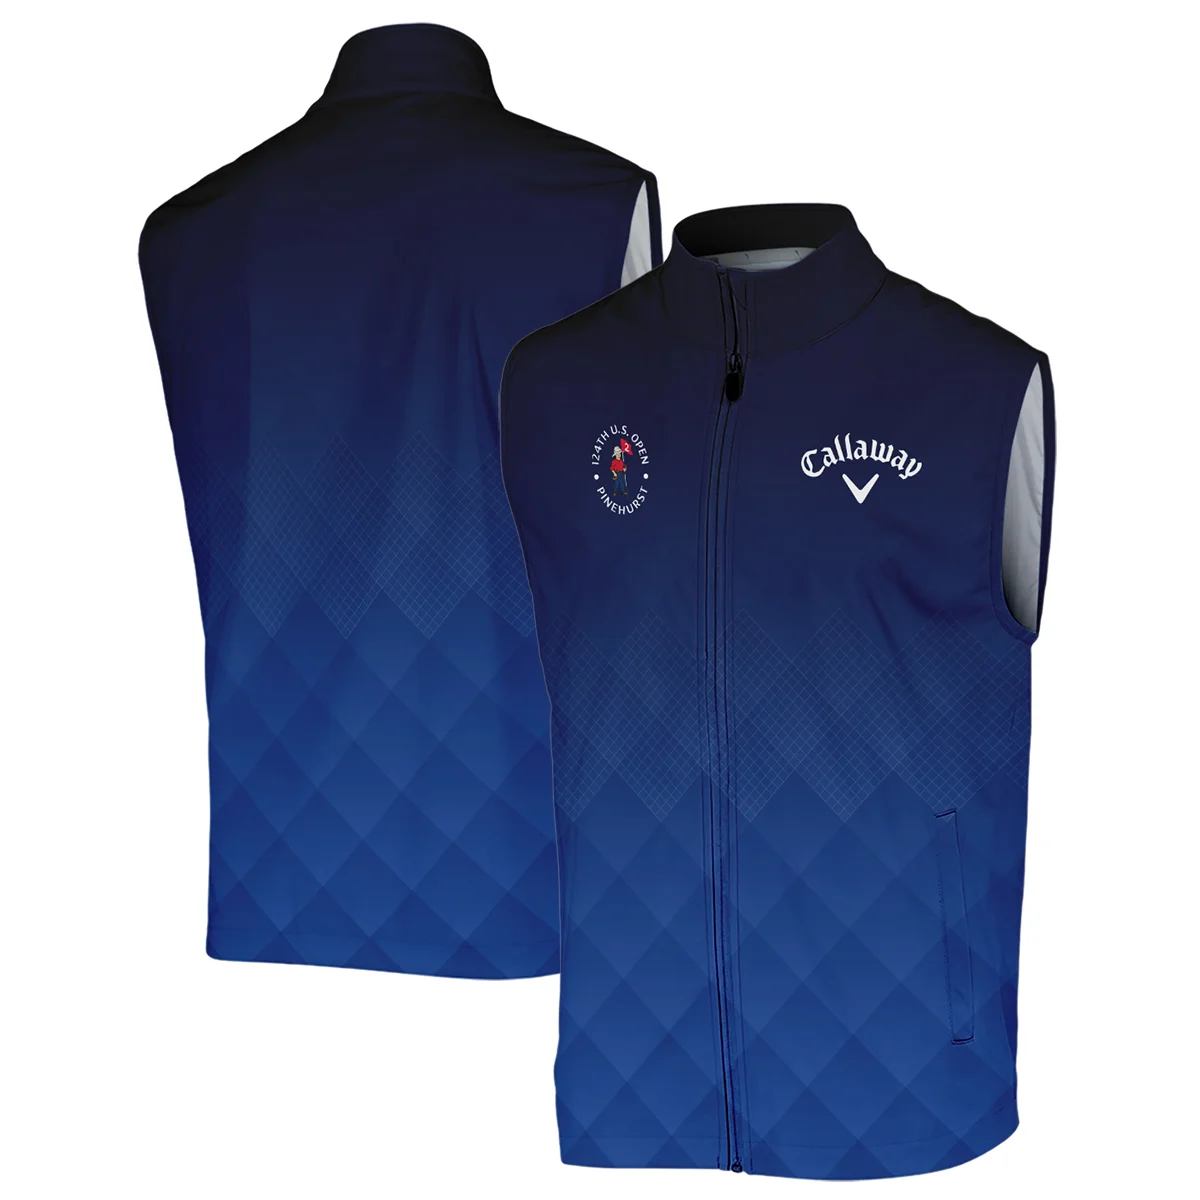 124th U.S. Open Pinehurst Callaway Dark Blue Gradient Stripes Pattern Quarter-Zip Jacket Style Classic Quarter-Zip Jacket